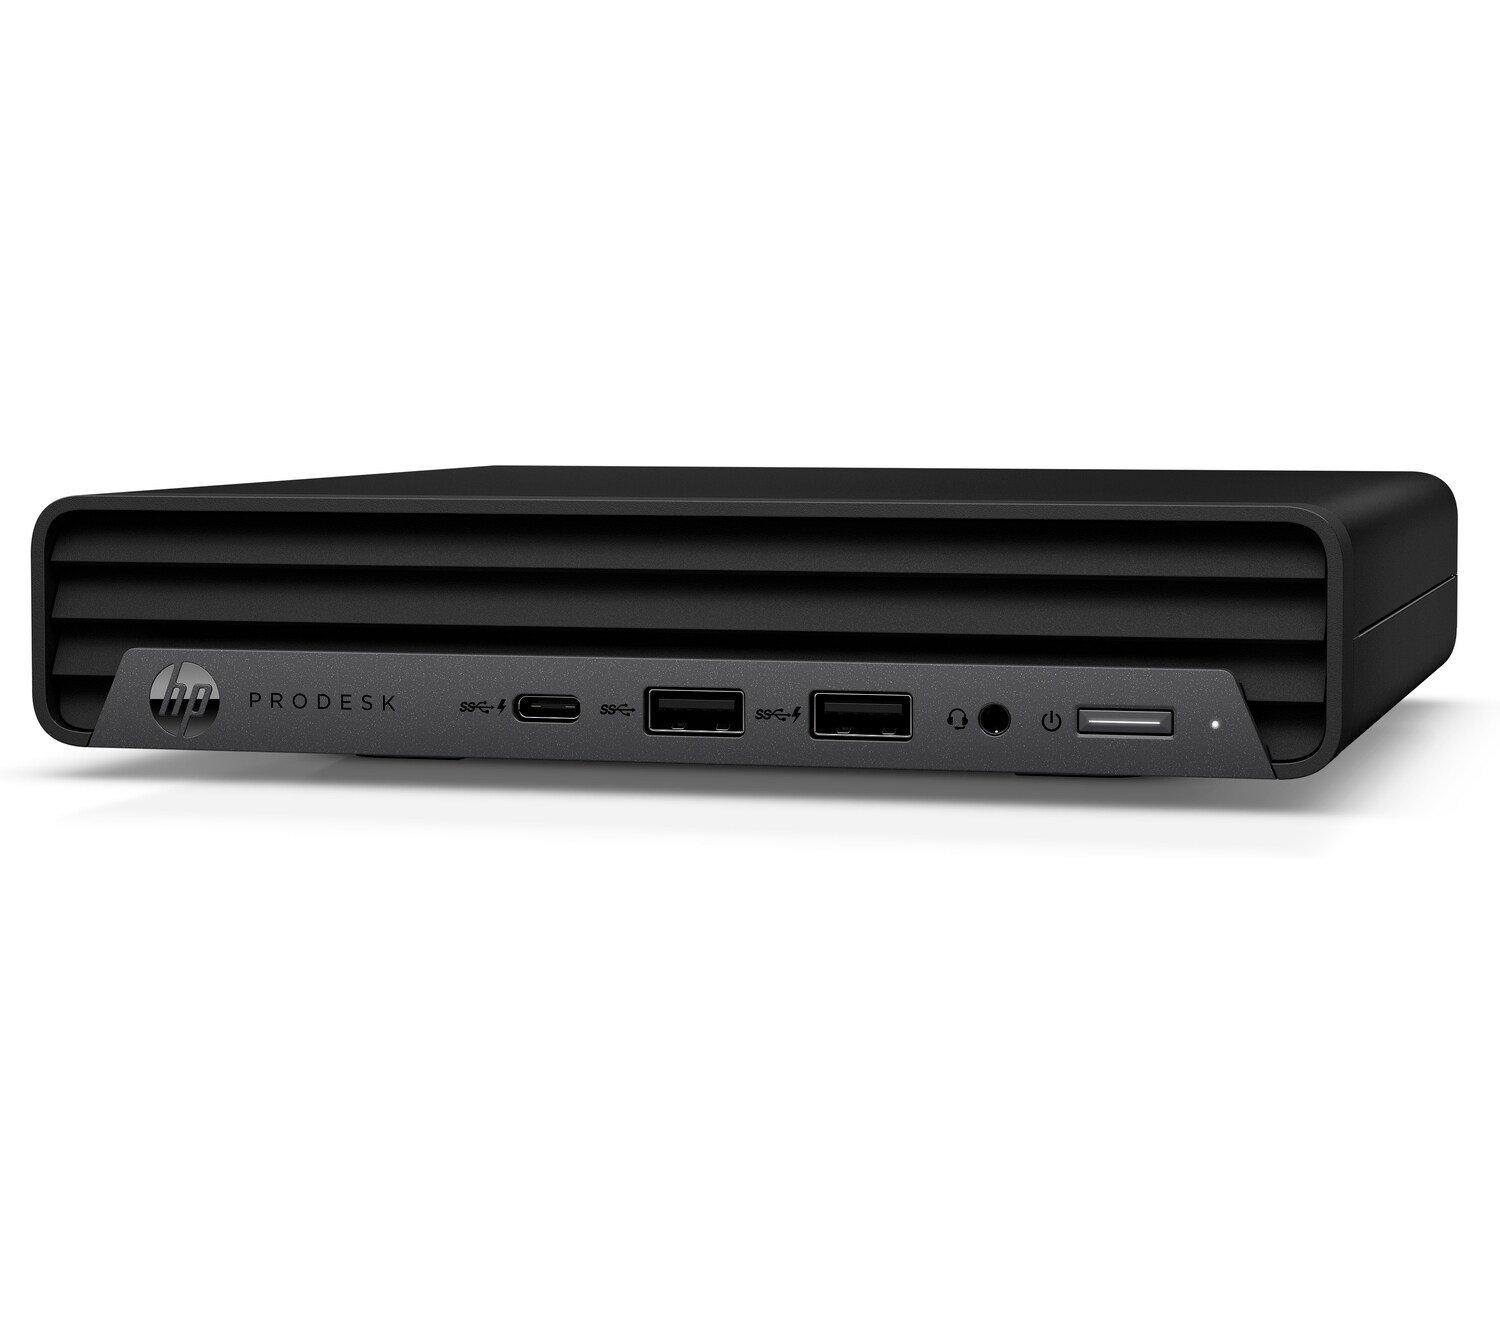 HP ProDesk 400 G6 Mini i5-10500T 3.8GHz 8GB RAM 256GB SSD WiFi Mini Form Factor Desktop with Windows 10 Pro